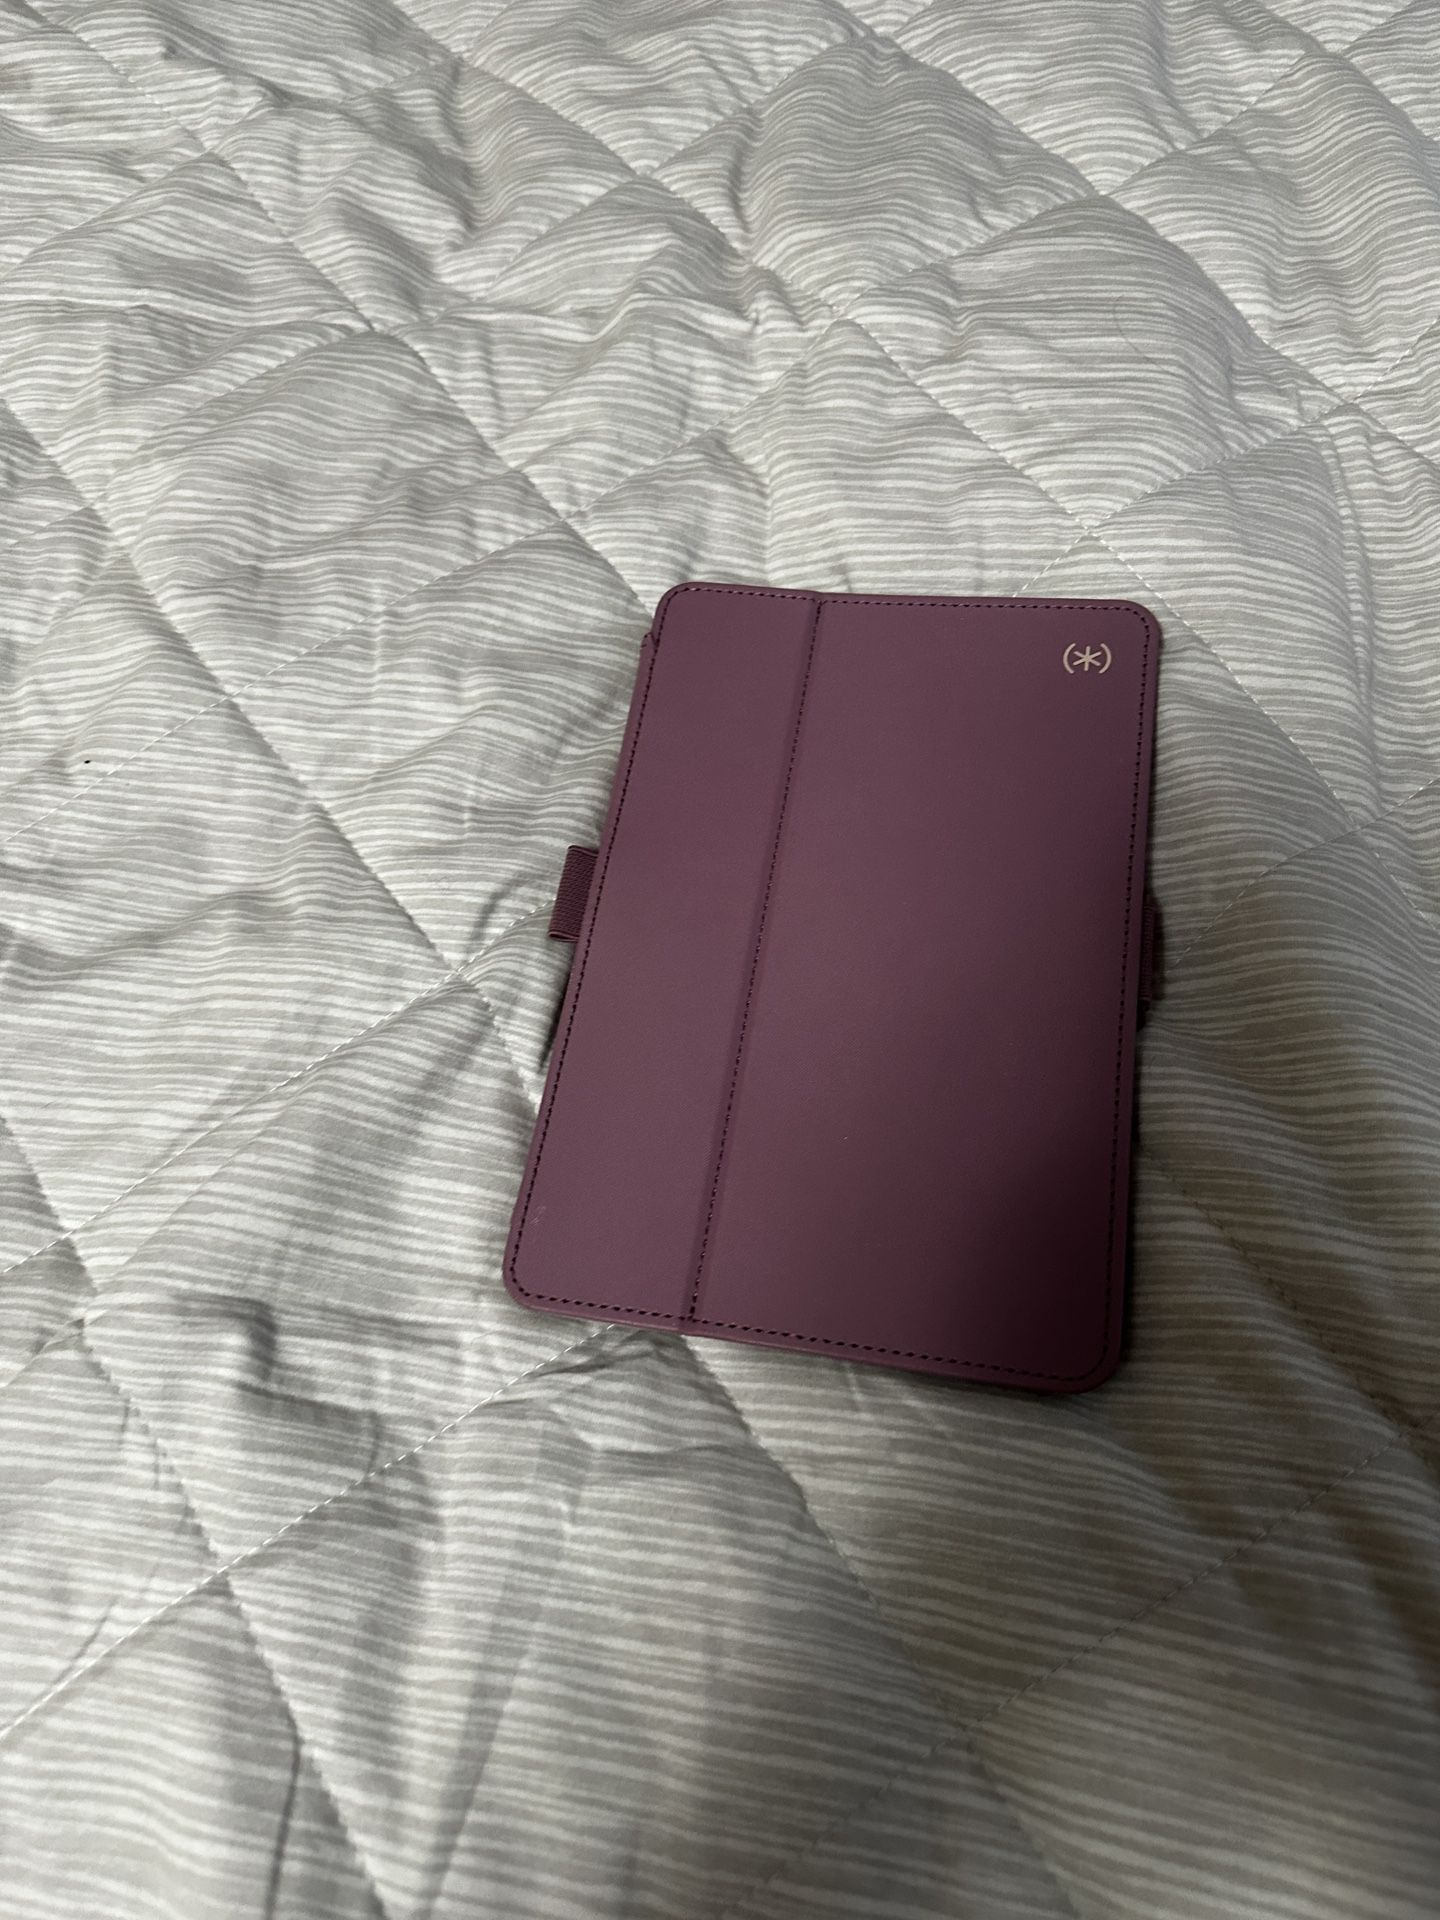 iPad Mini 5th Gen Case With Apple Pencil Holder